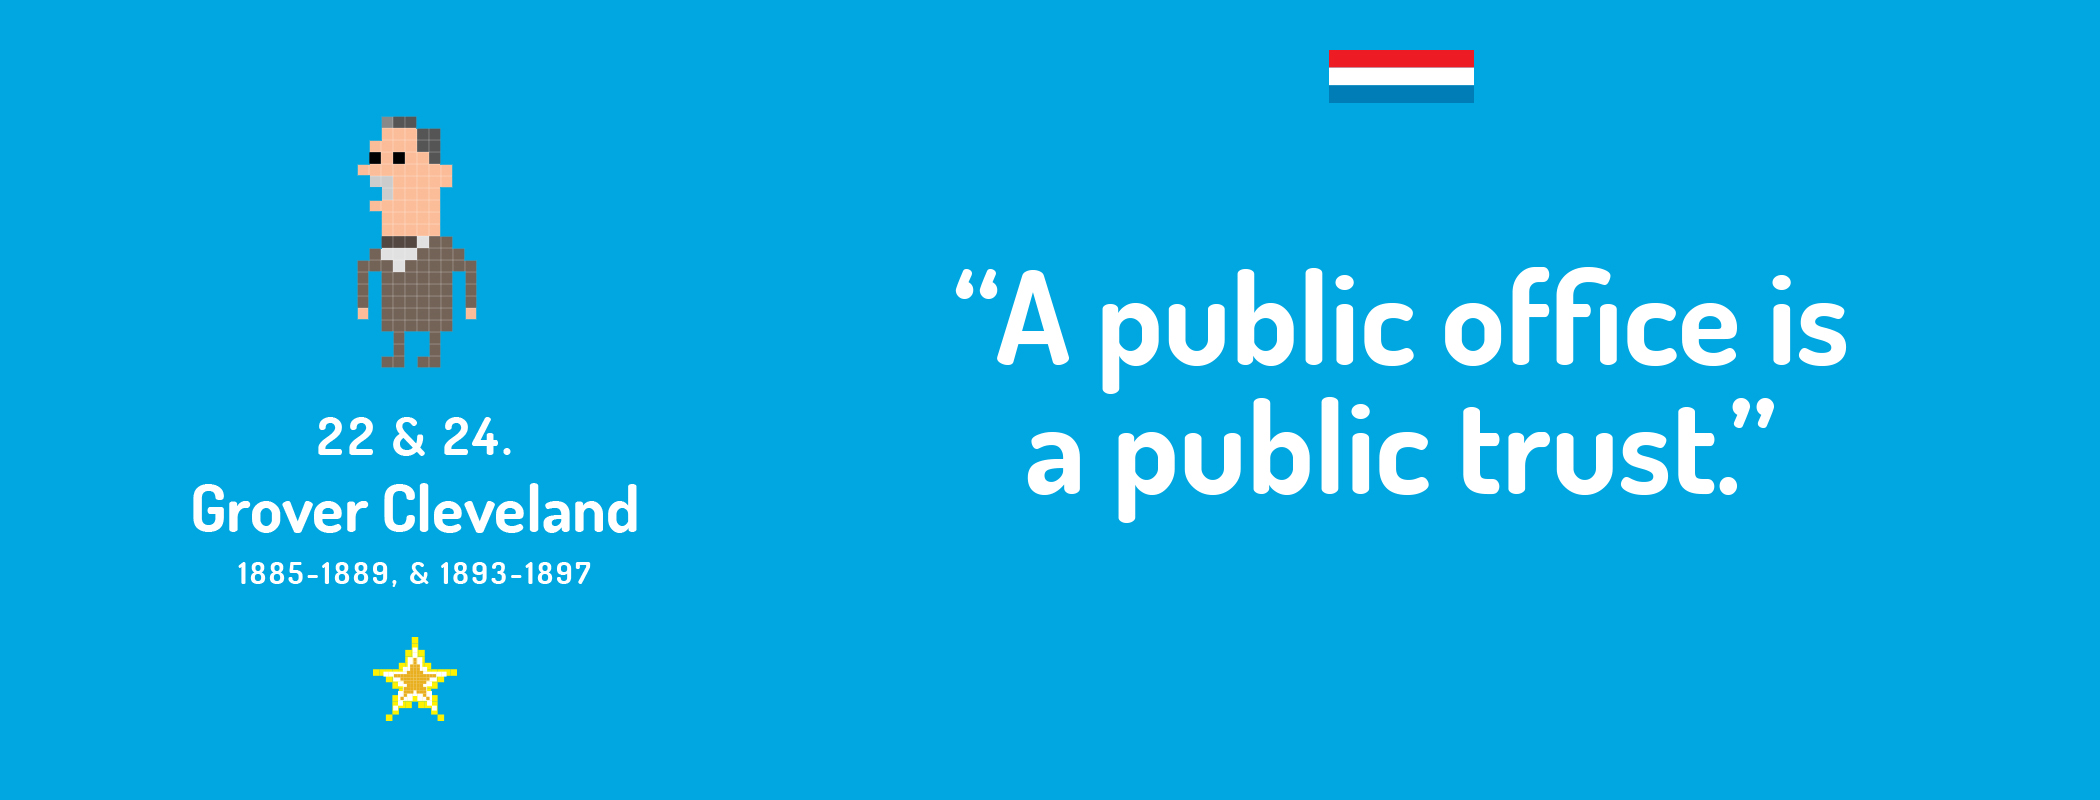 A public office is a public trust.